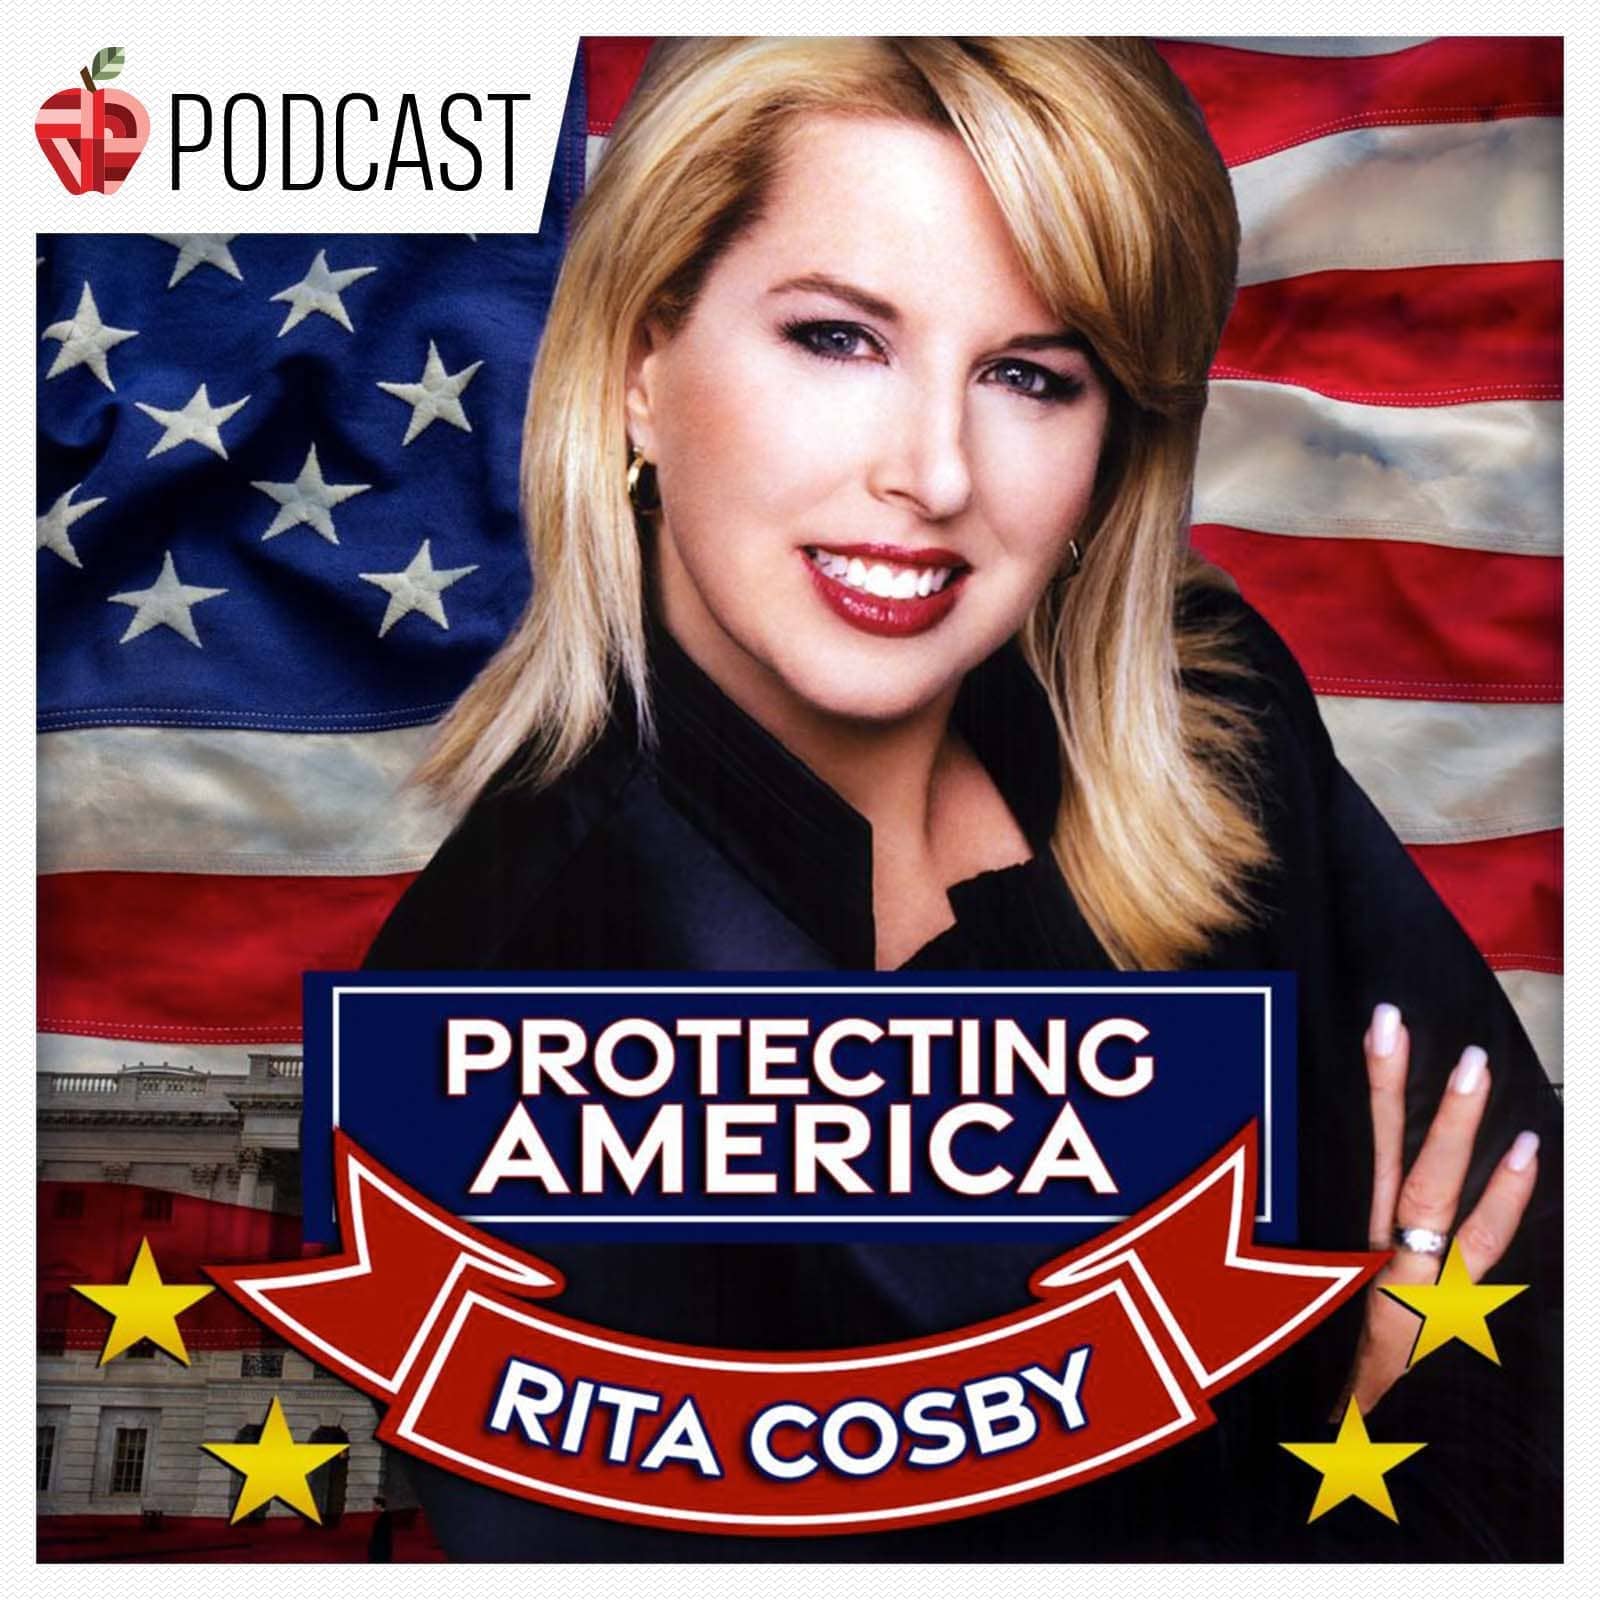 rita-cosby-protecting-america-correct-podcast-new-logo-42